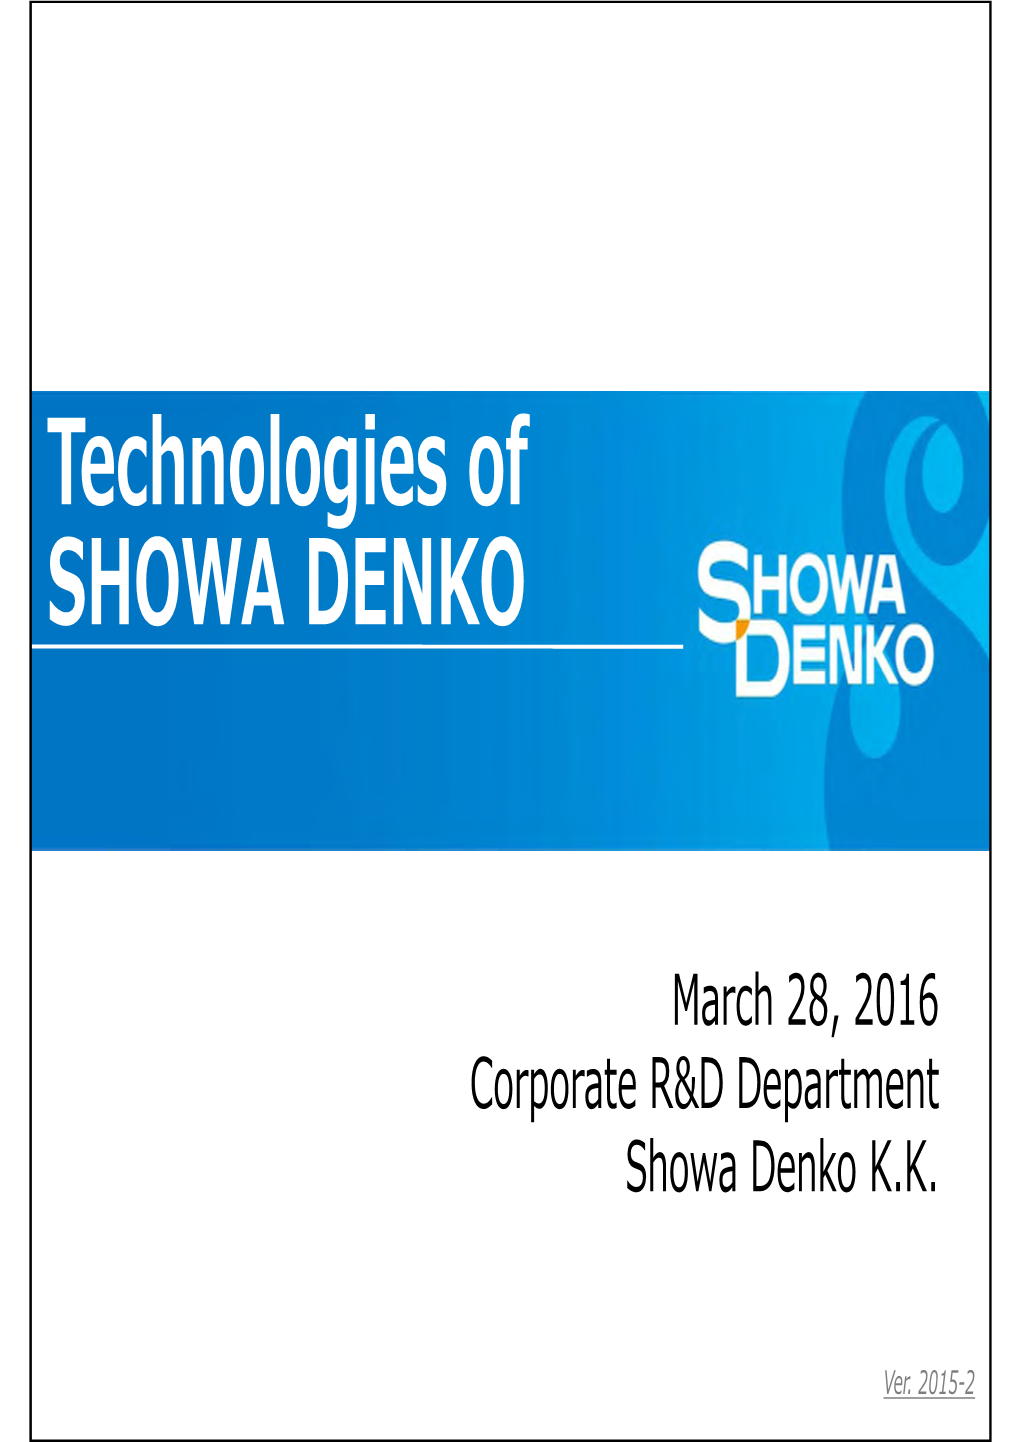 Technologies of SHOWA DENKO